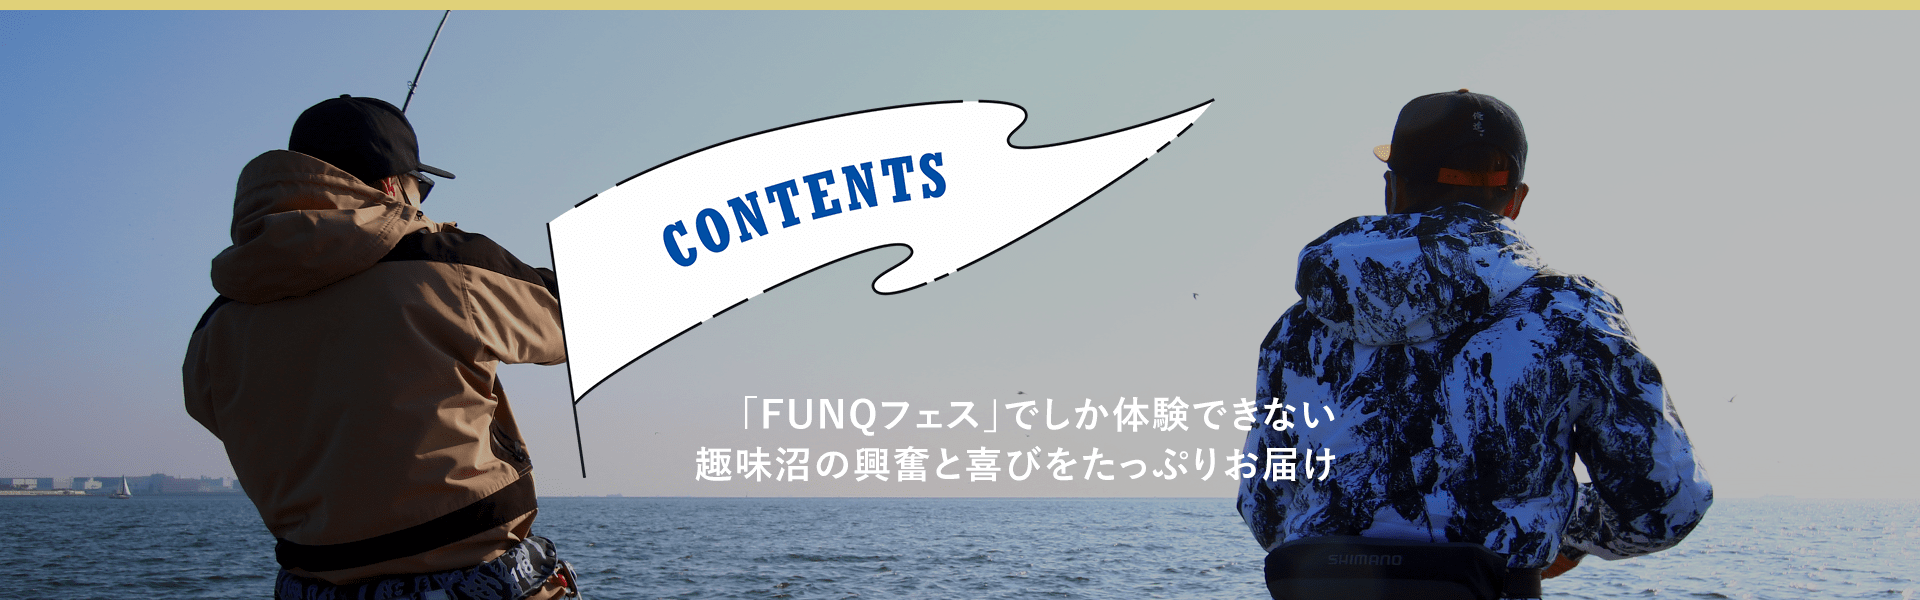 FUNQフェスオンライン2021 winter ABOUT